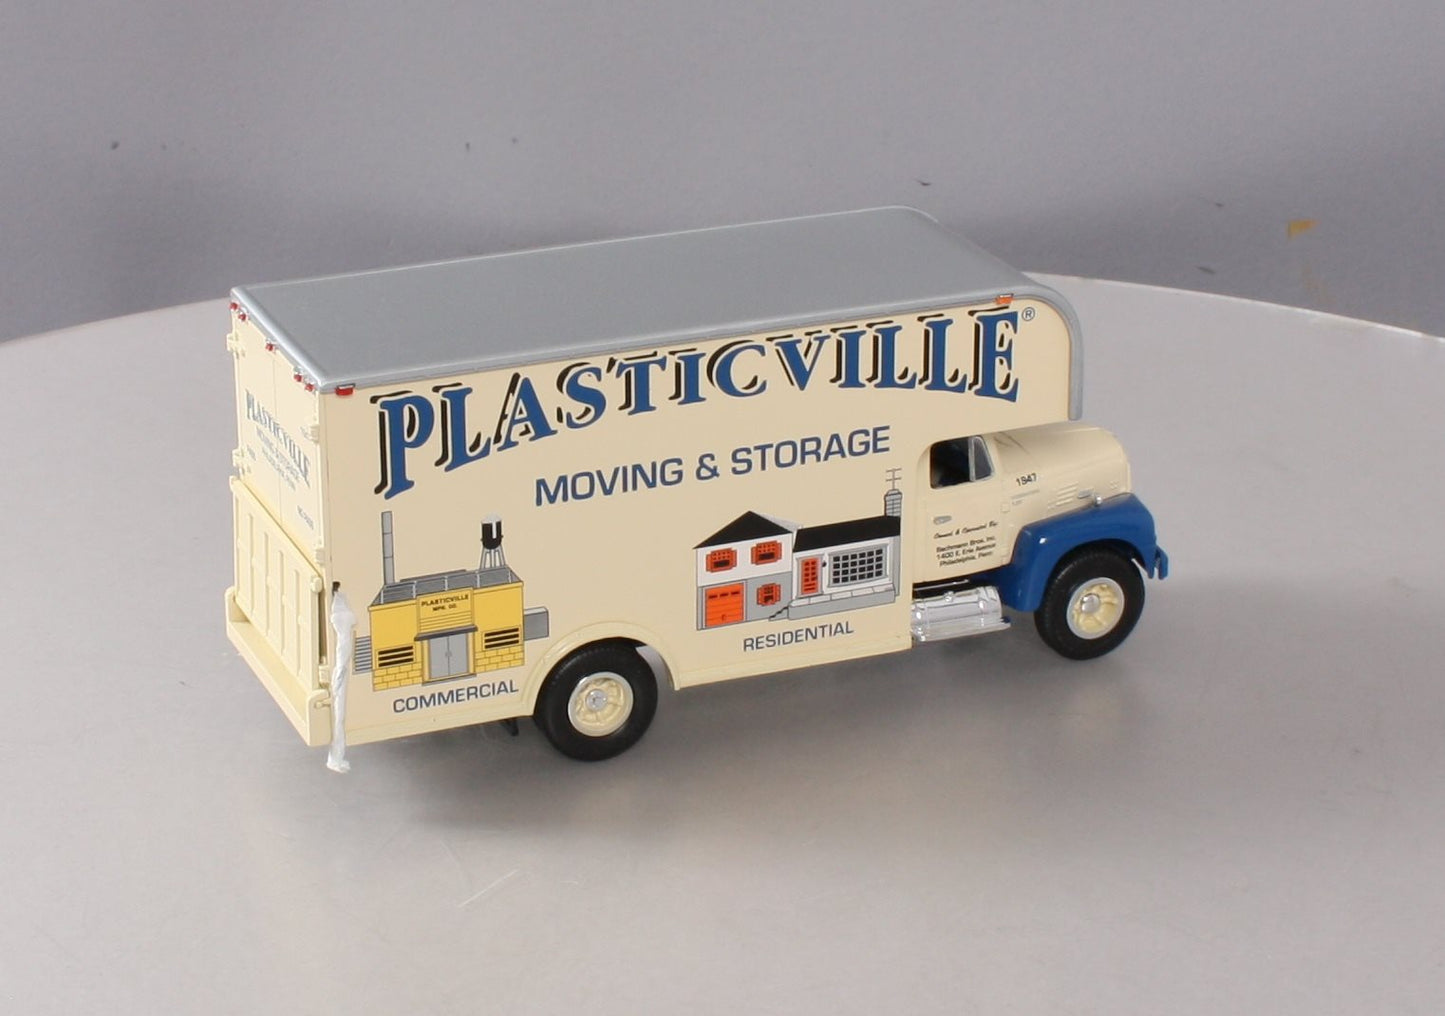 Eastwood Automobilia 19-1671 1:34 Scale Plasticville 1957 International R-200 M LN/Box